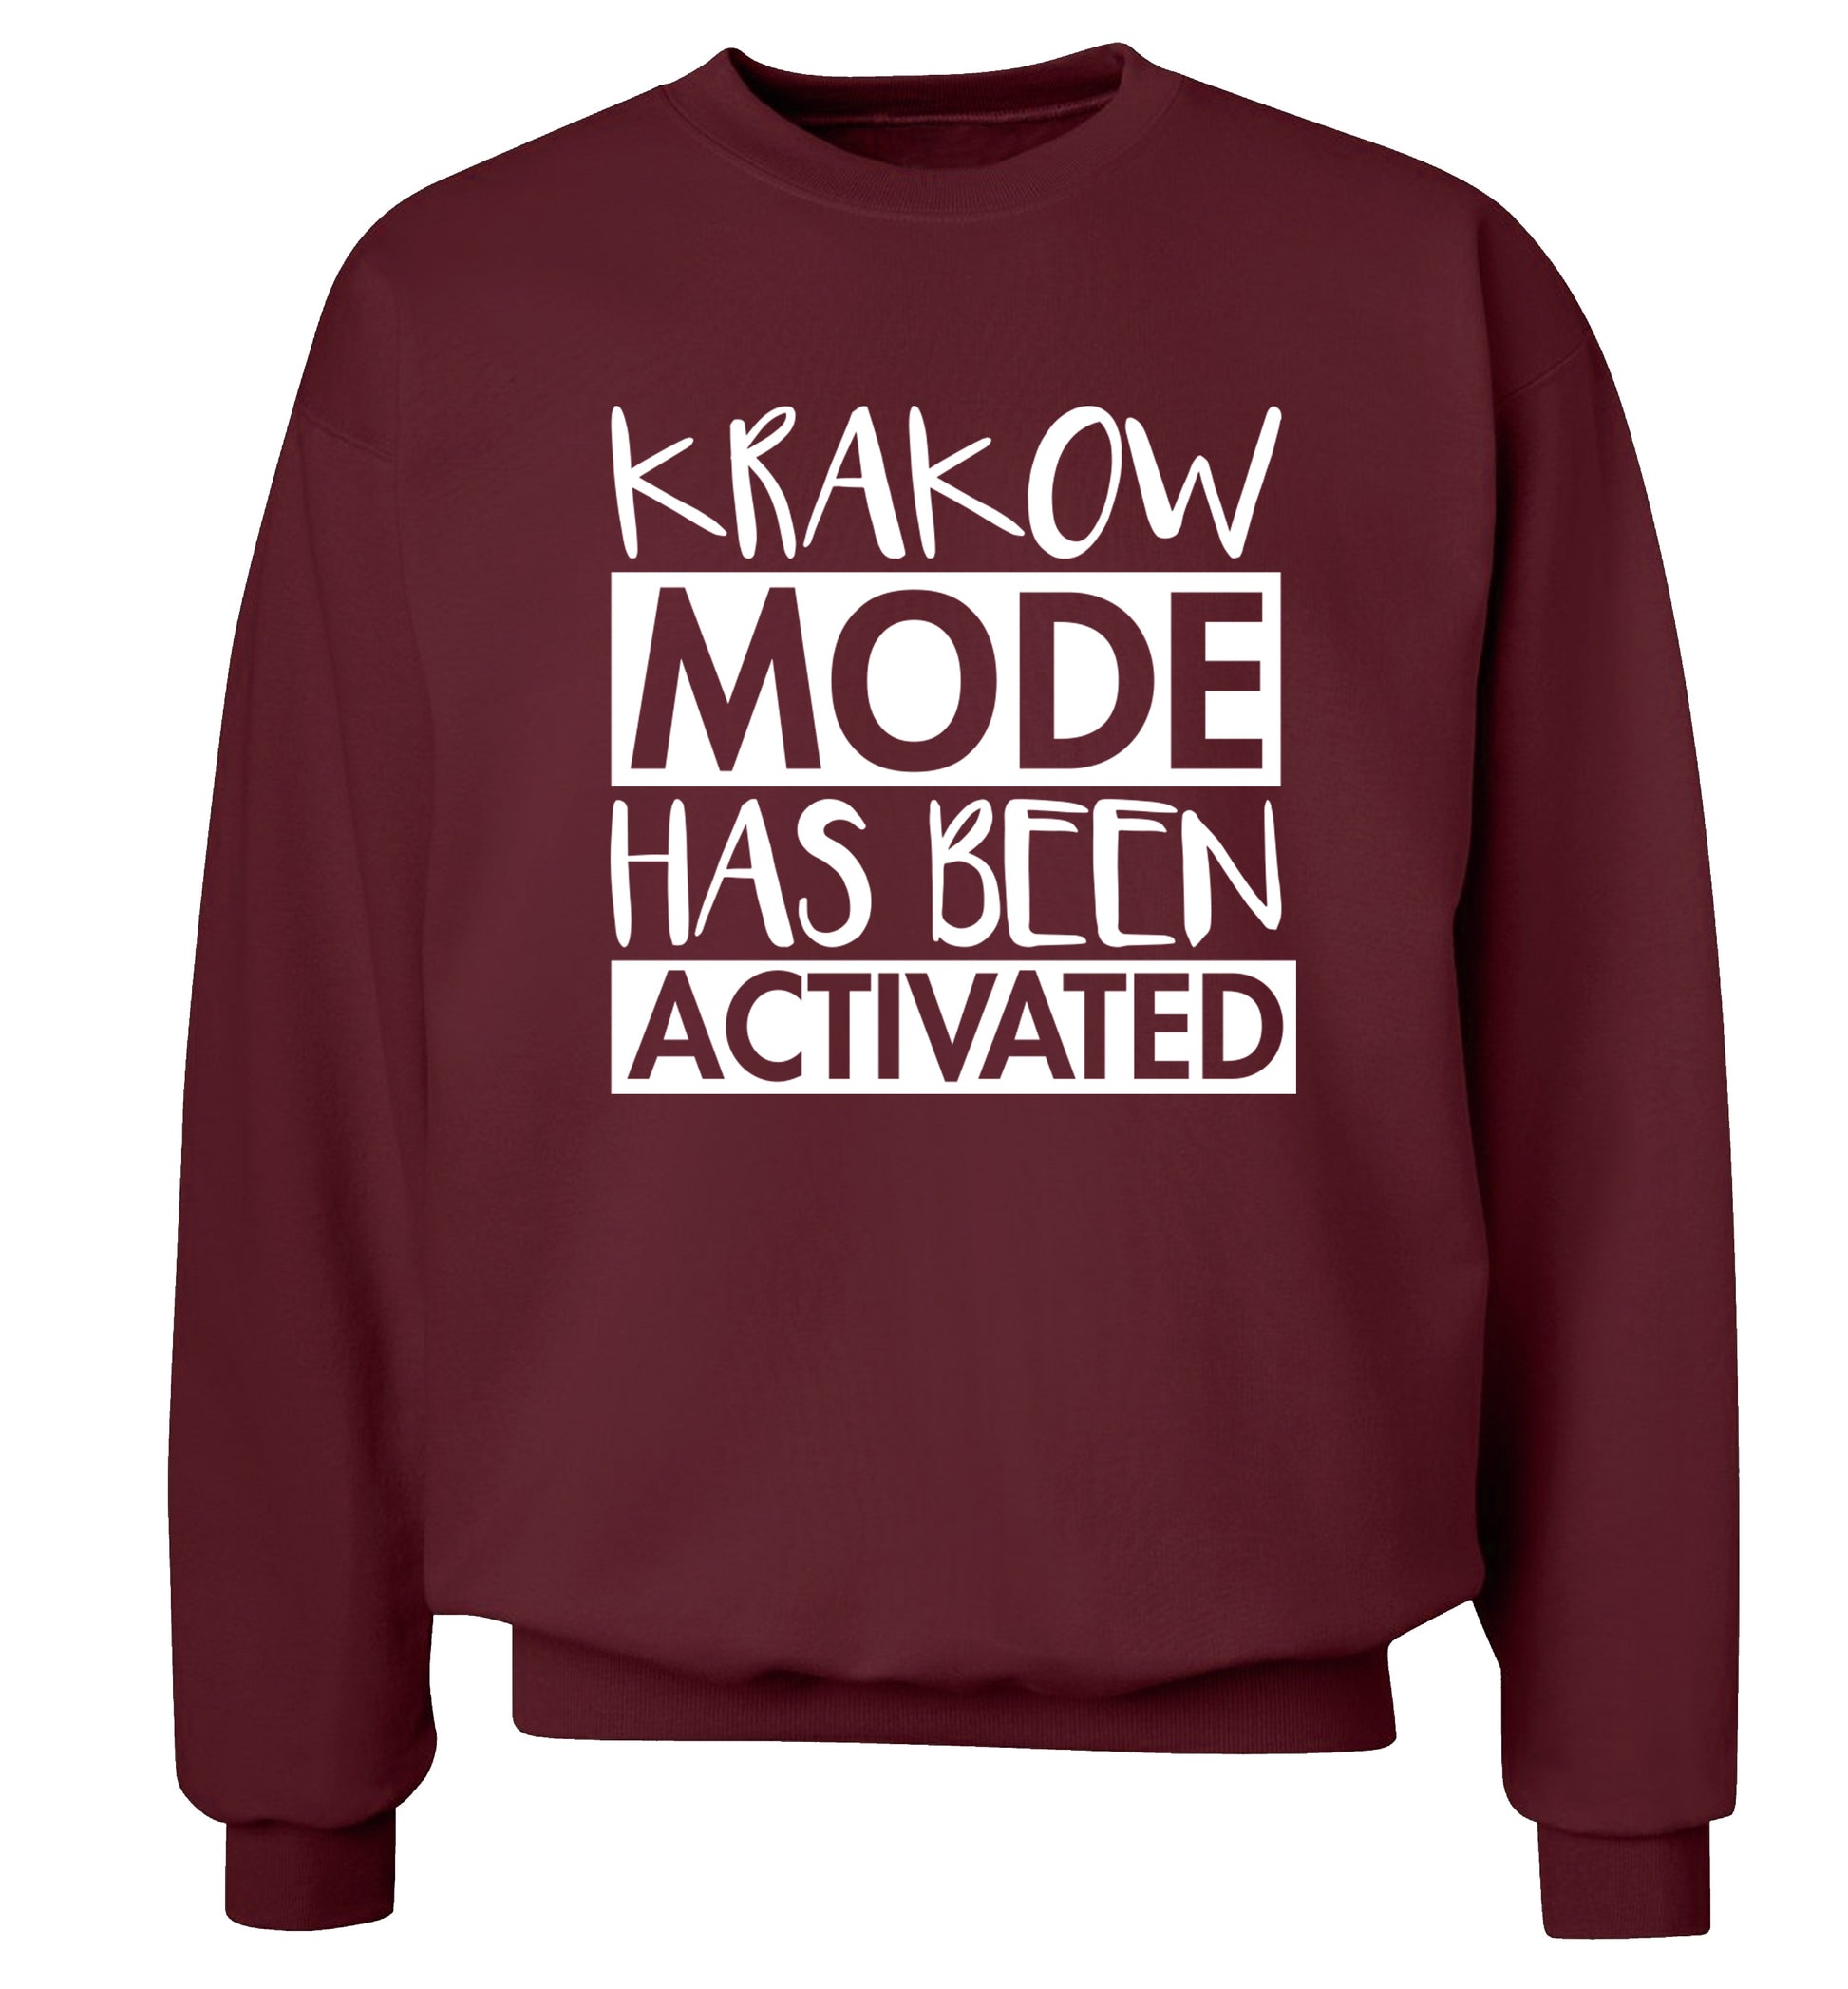 Krakow mode has been activated Adult's unisex maroon Sweater 2XL